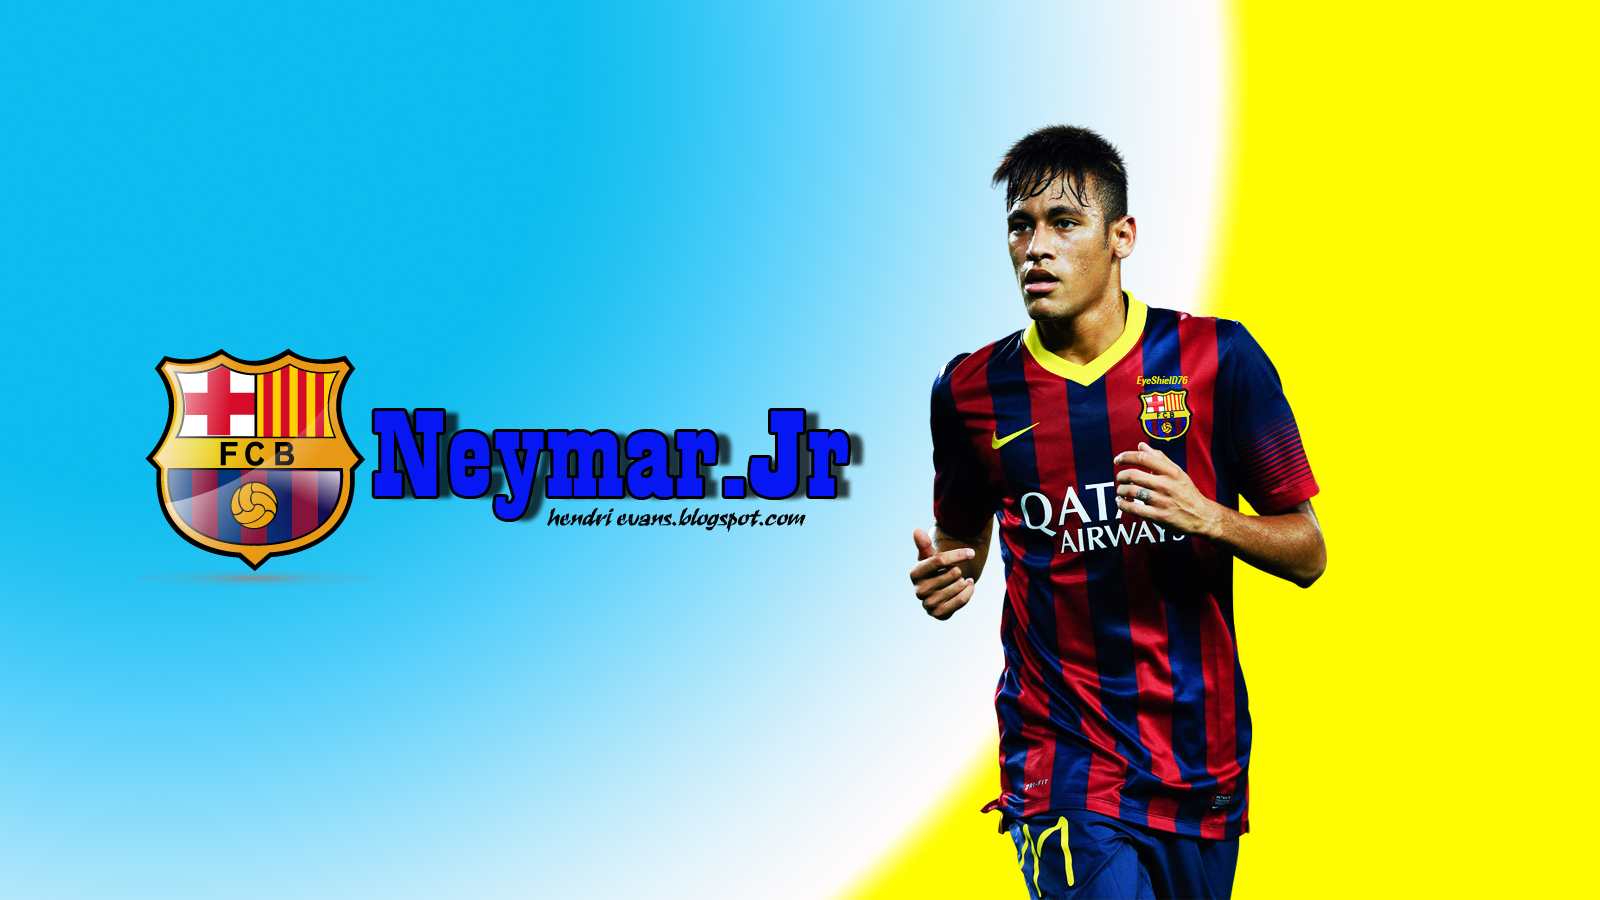 papier peint neymar jr terbaru,joueur de football,produit,joueur,joueur de football,équipe